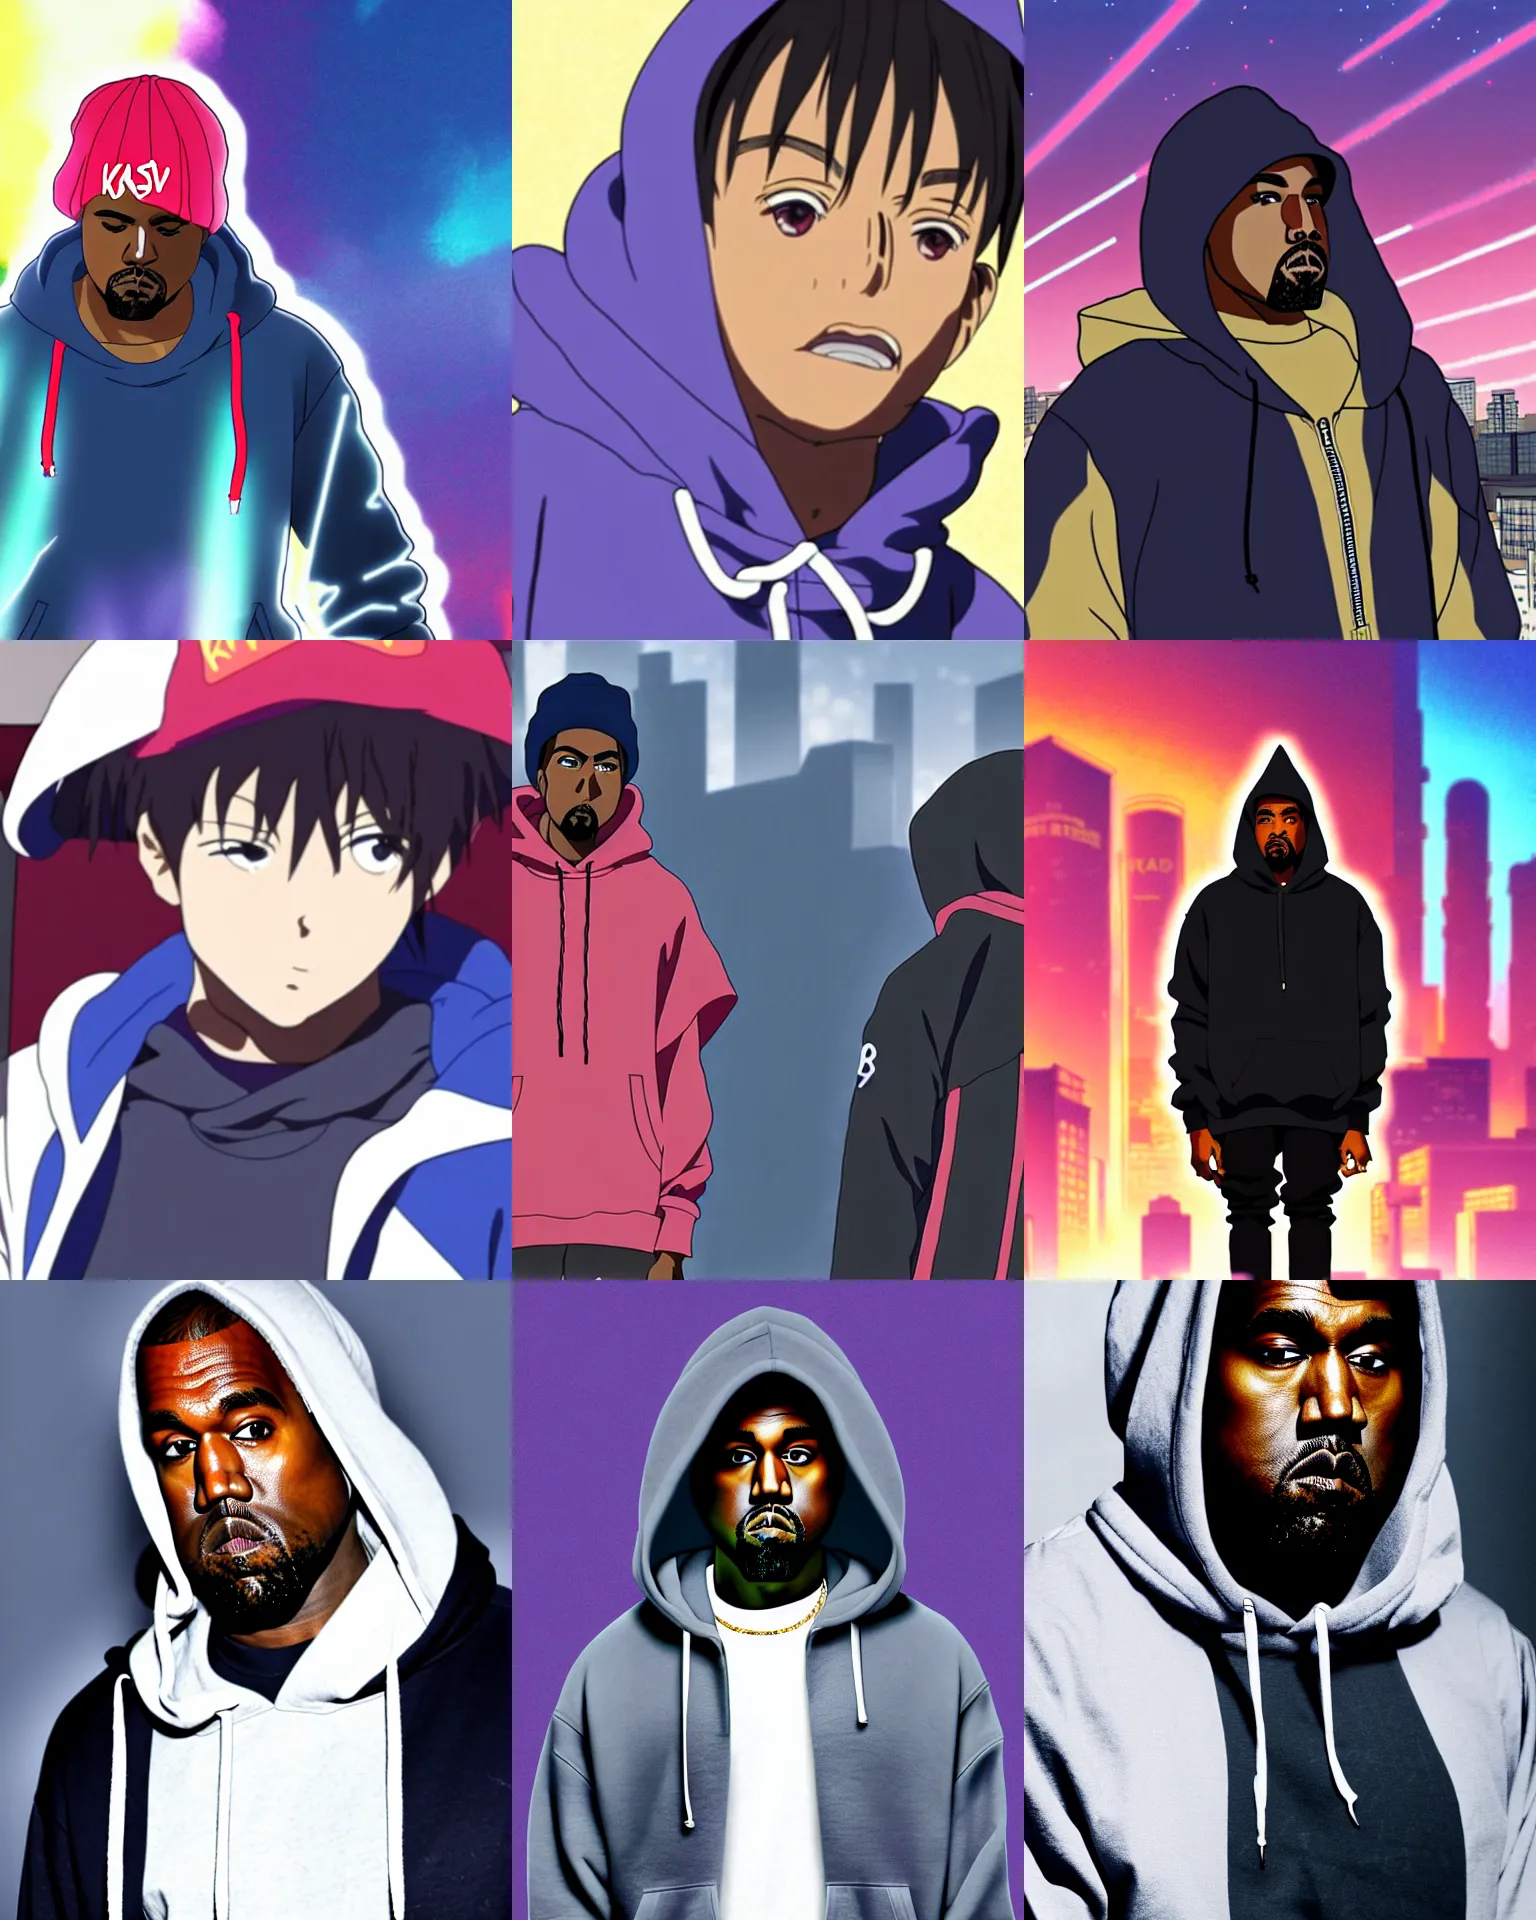 Kanye West as Shonen Protagonist anime character  starryai